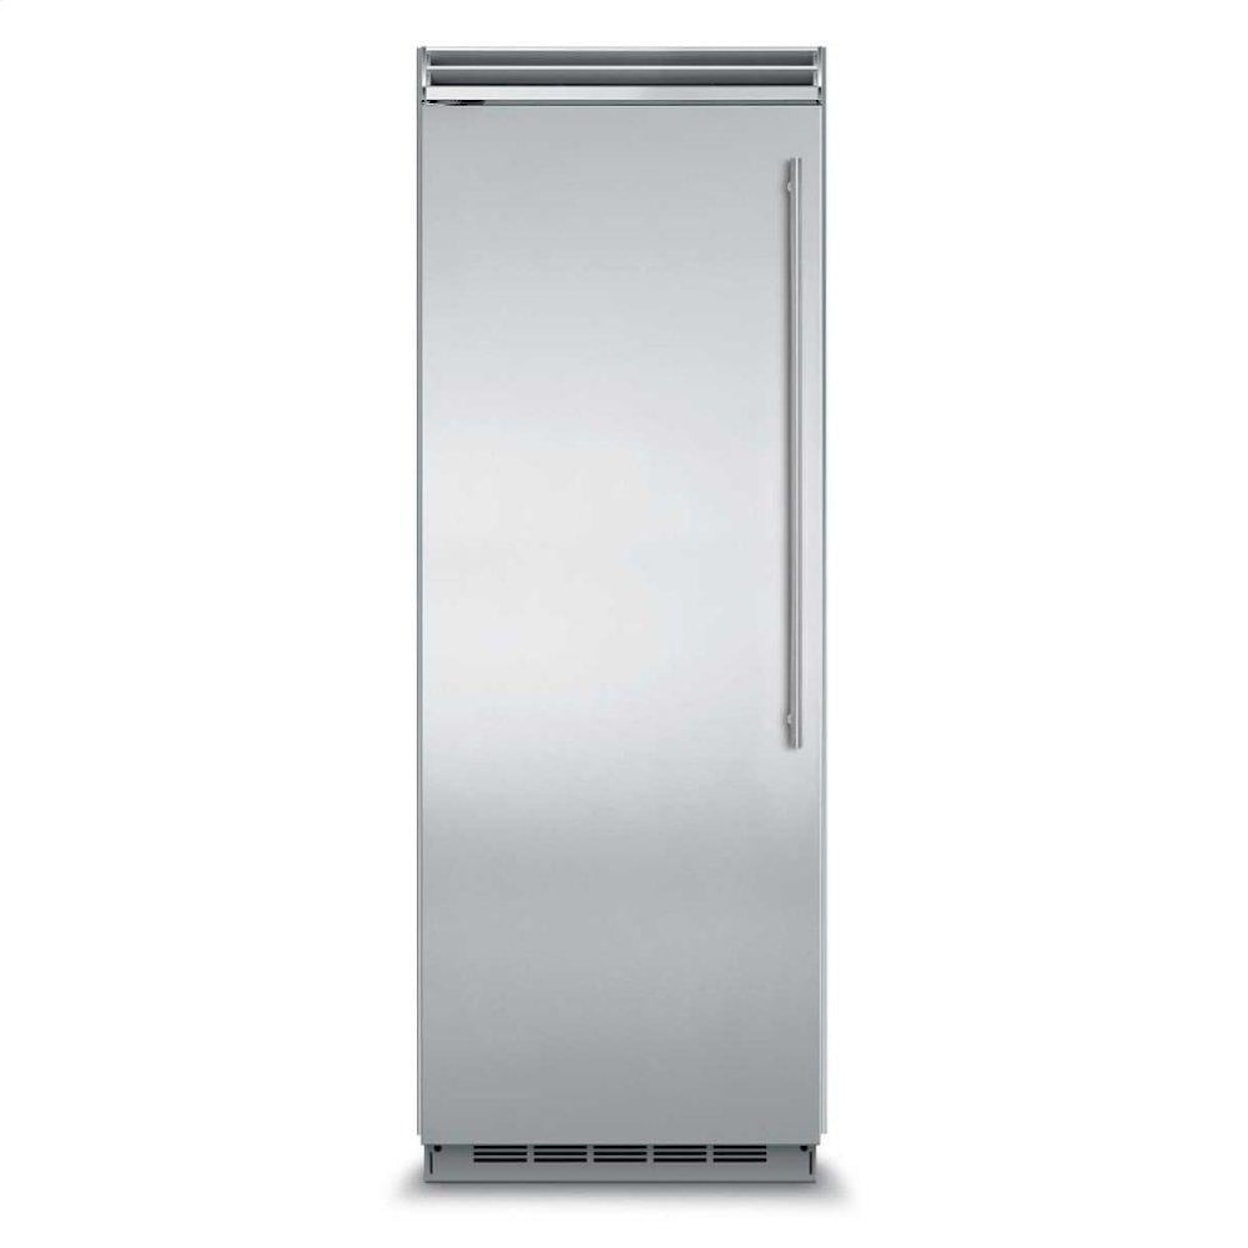 Marvel Industries Refrigerators No Freezer Built In Refrigerator